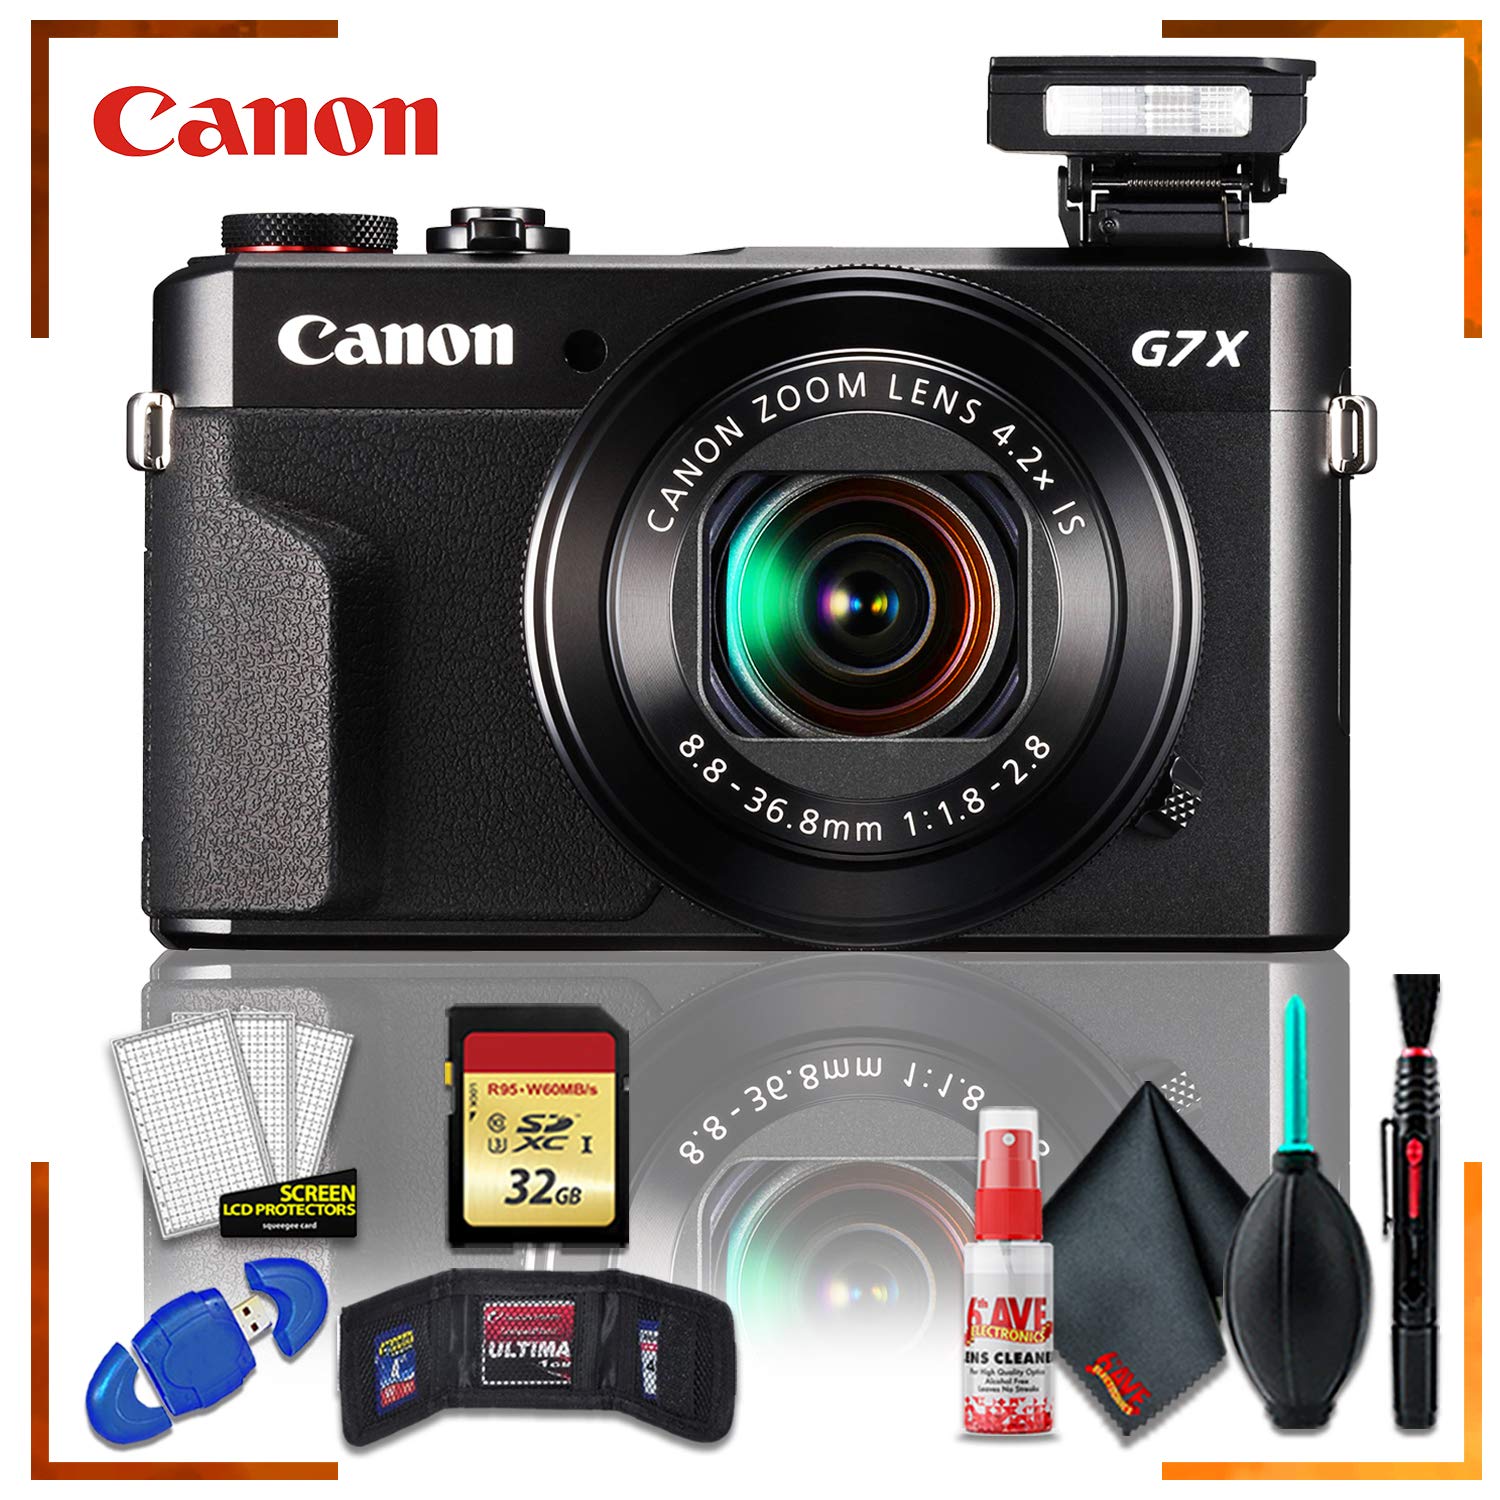 Canon PowerShot G7 X Mark II Digital Camera (Intl Model) + 32gb Memory SD Card Bundle + Cleaning Kit